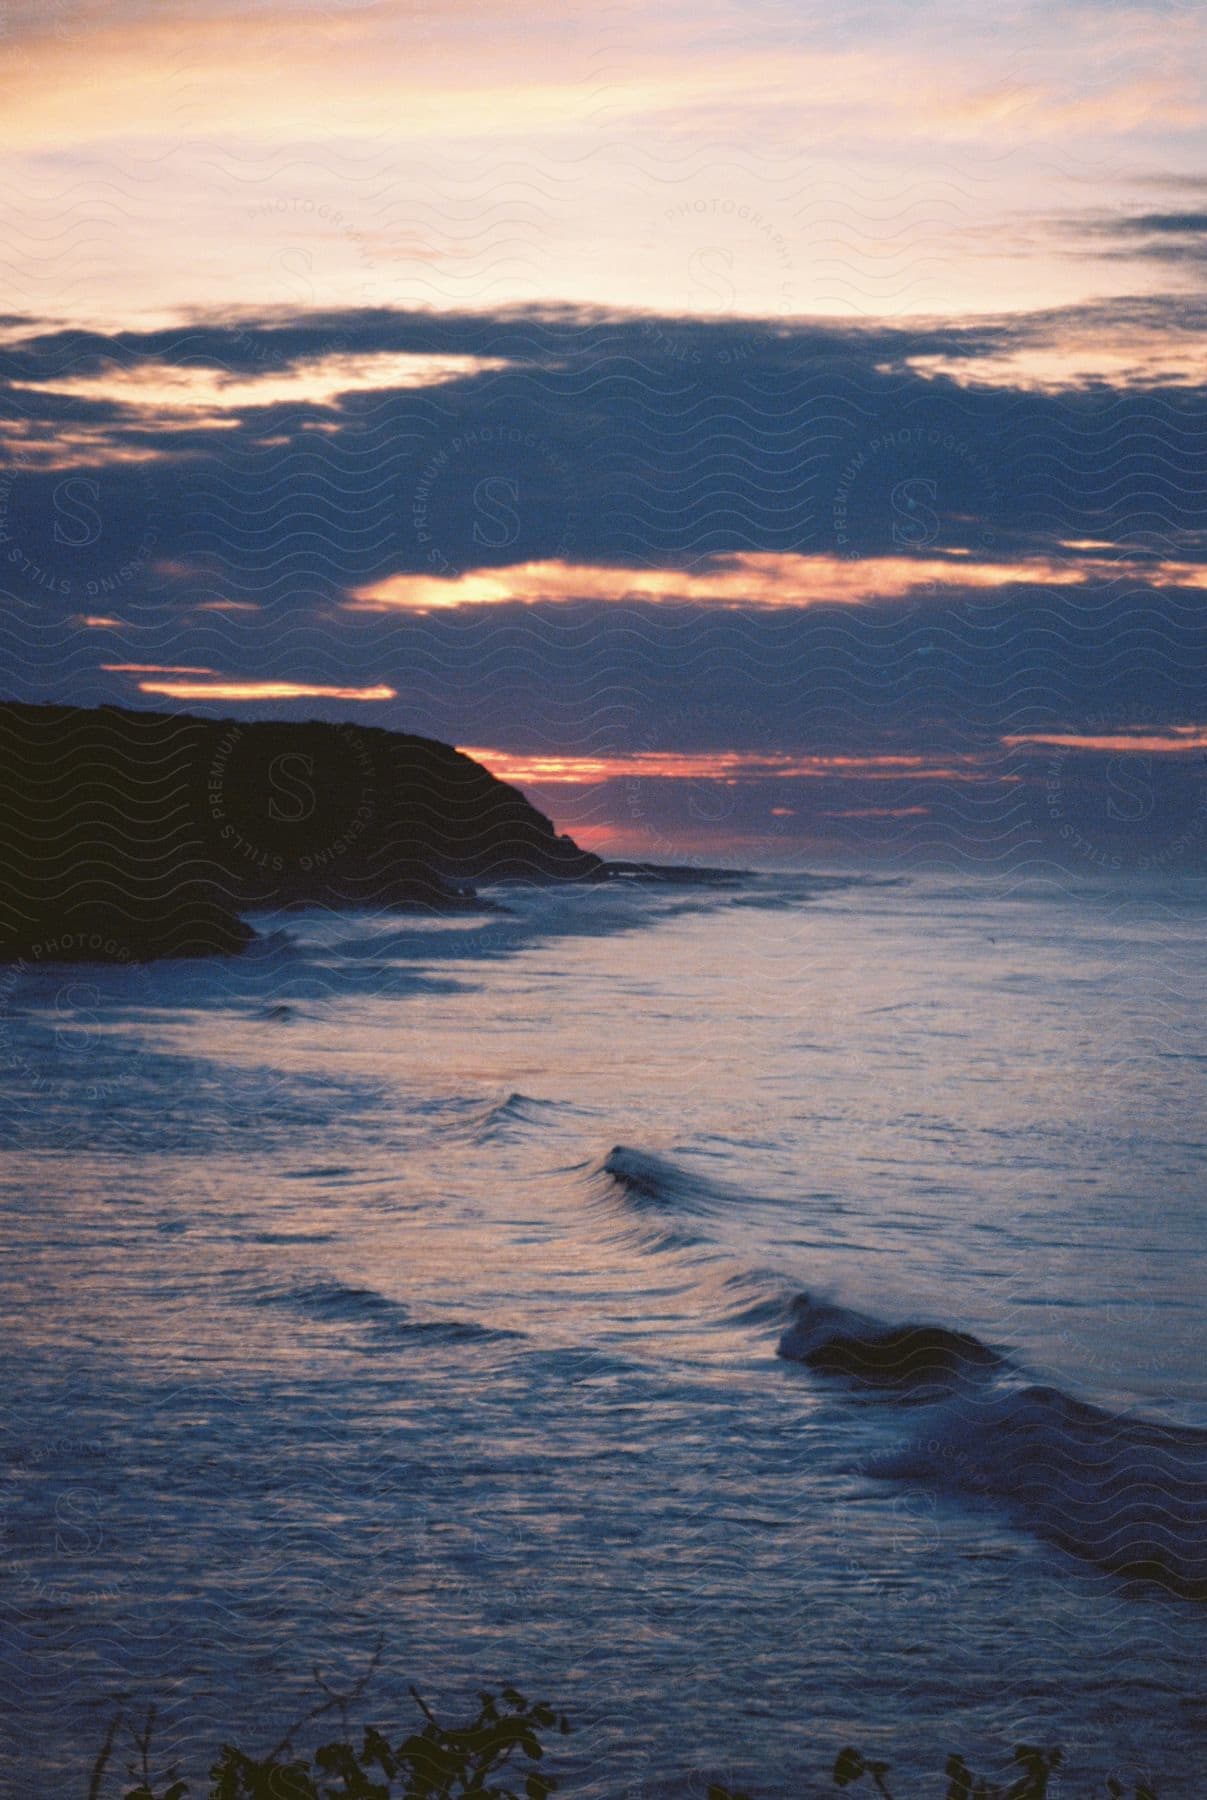 Waves near a coast with cliffs